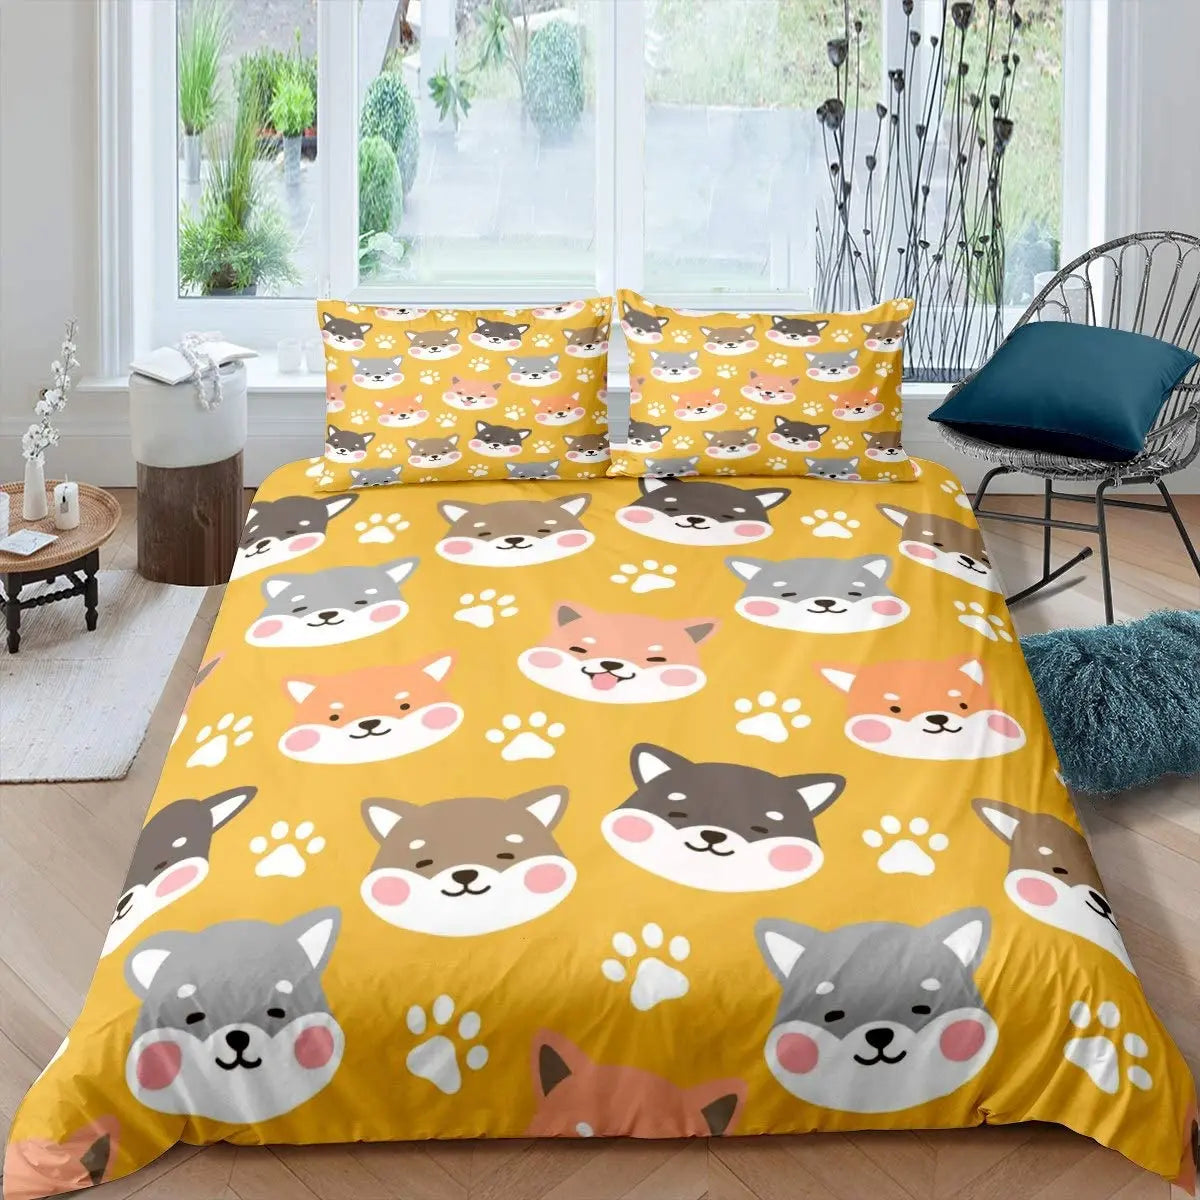 Shiba Inu Duvet Cover Cute Shiba Inu Bedding Set Dog Loves Bedding Set Microfiber Cartoon Animal Pattern Queen King Quilt Cover